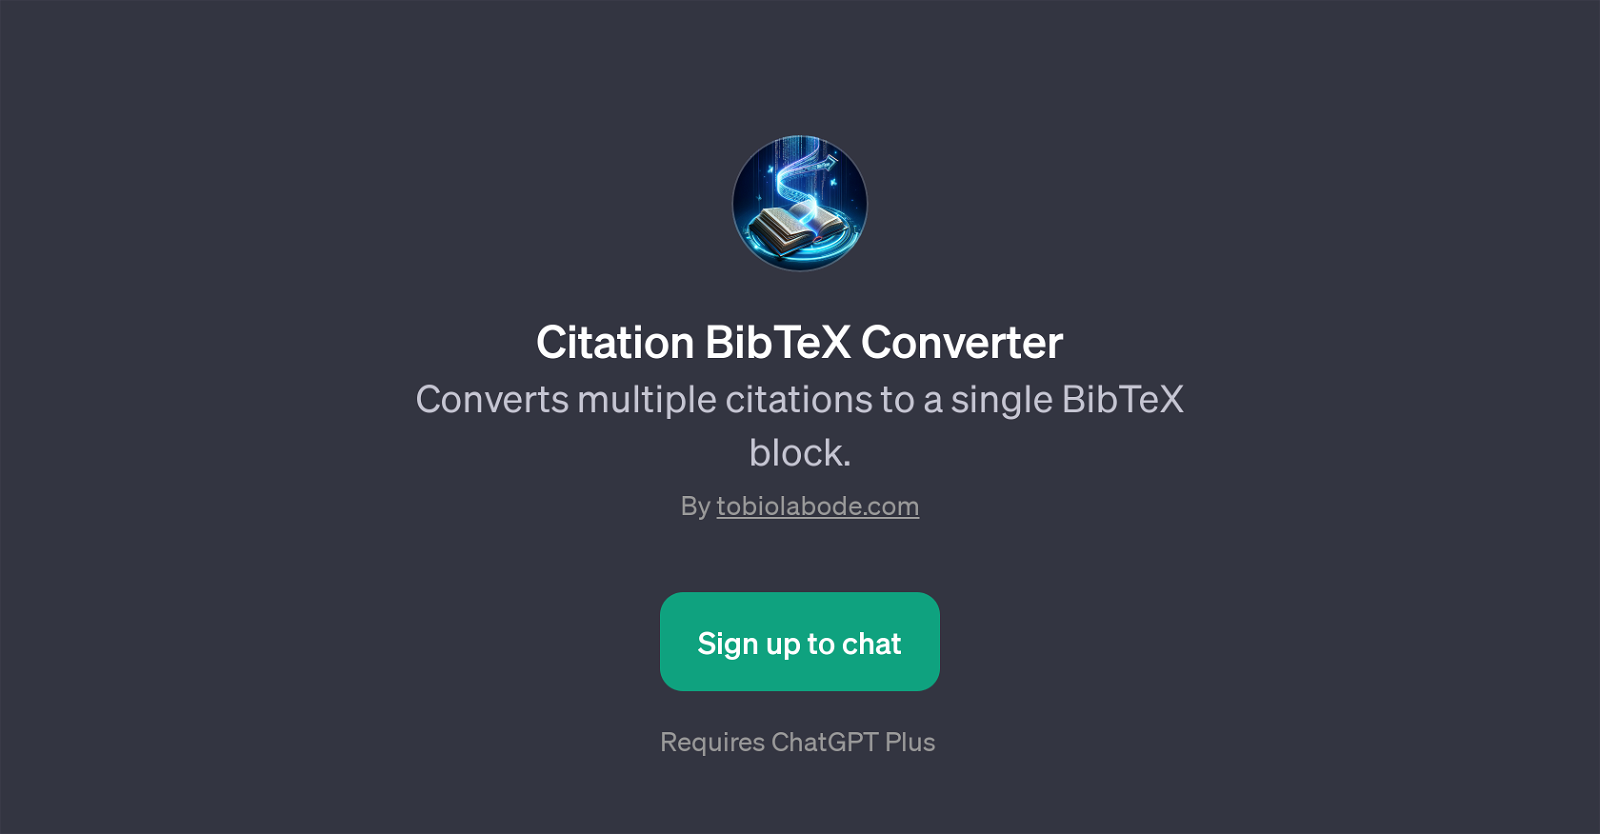 Citation BibTeX Converter website